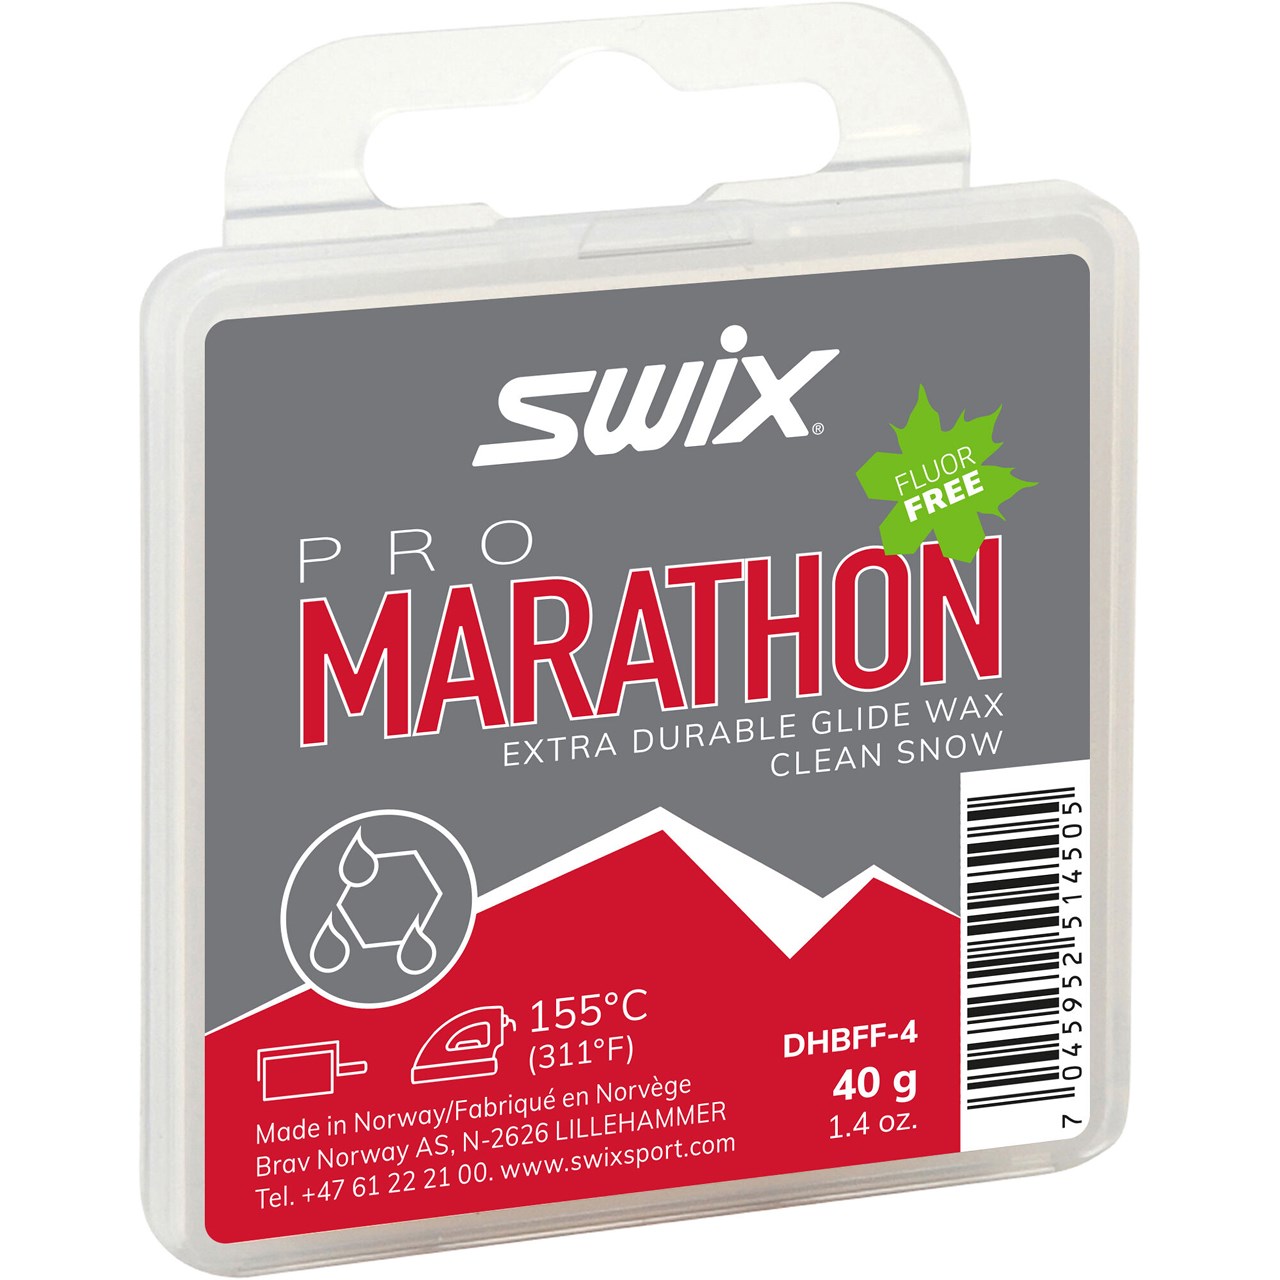 Swix. Pro Marathon. Fluor Free. Black